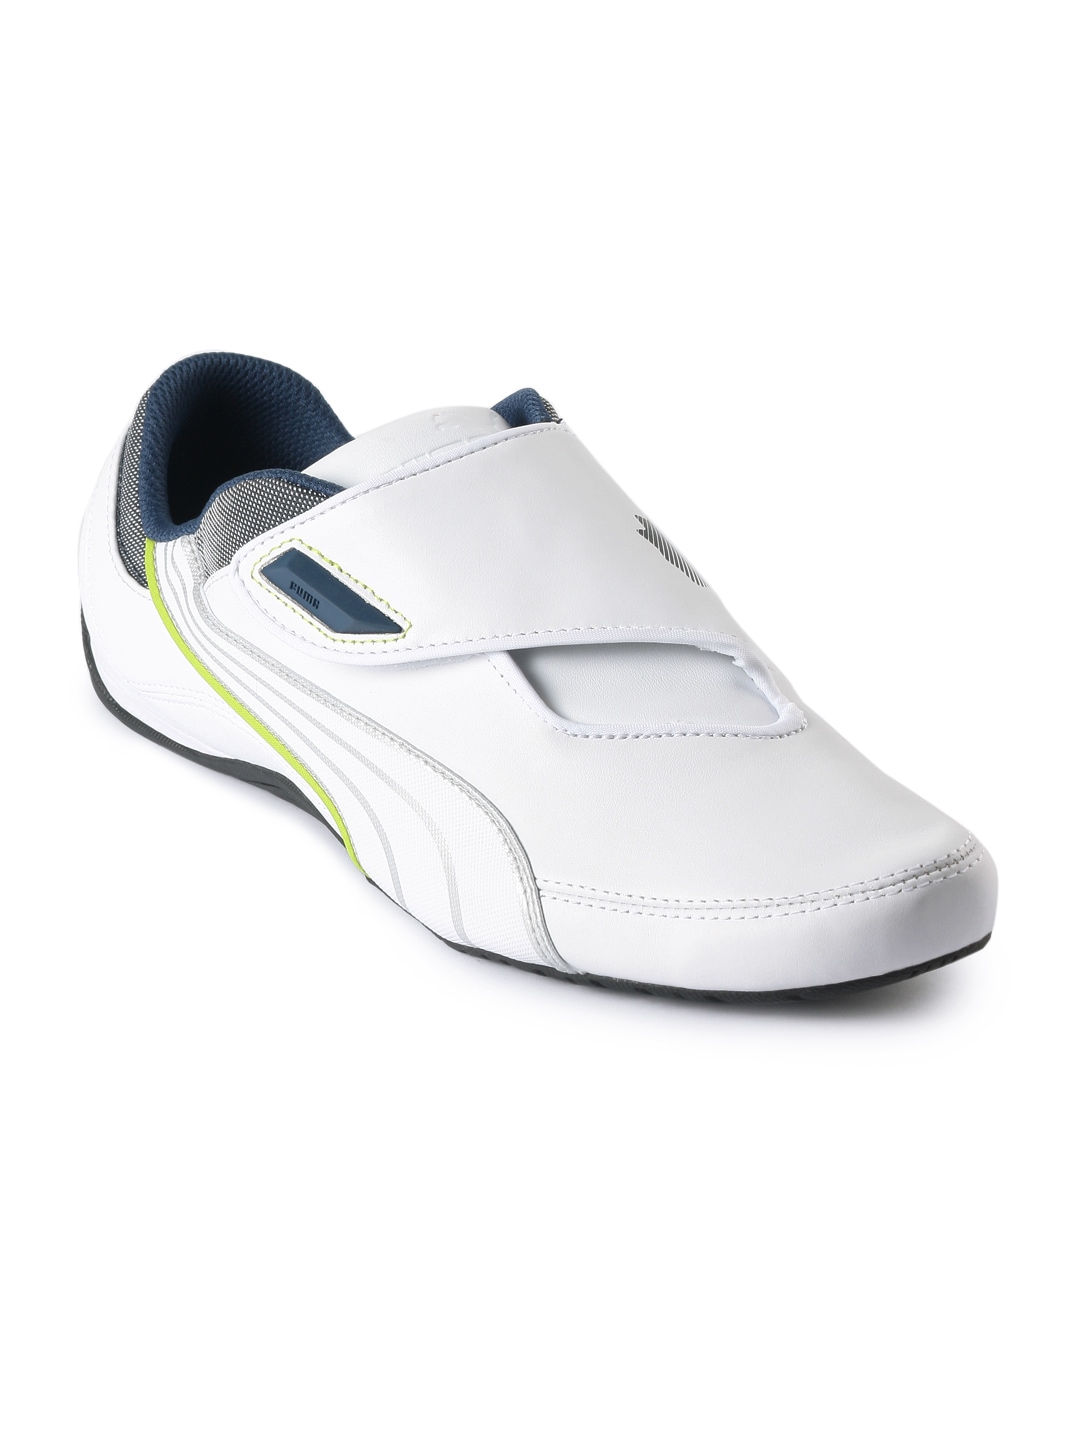 Puma Men Drift White Casual Shoes